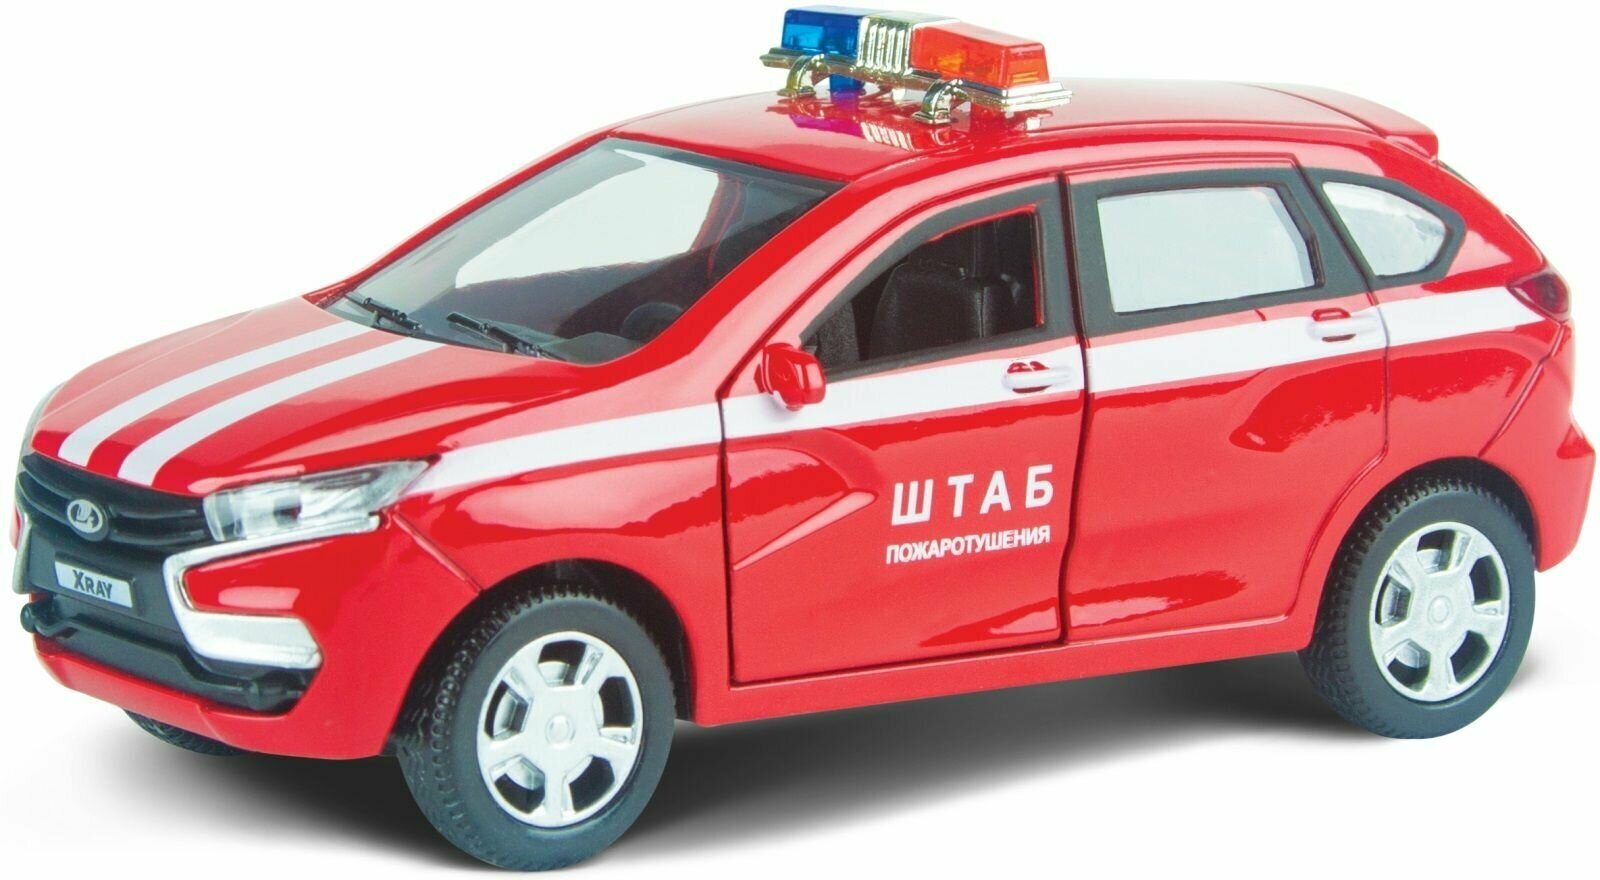 Машинка лада XRAY пожарная, полиция и дпс, масштаб 1:36, красная